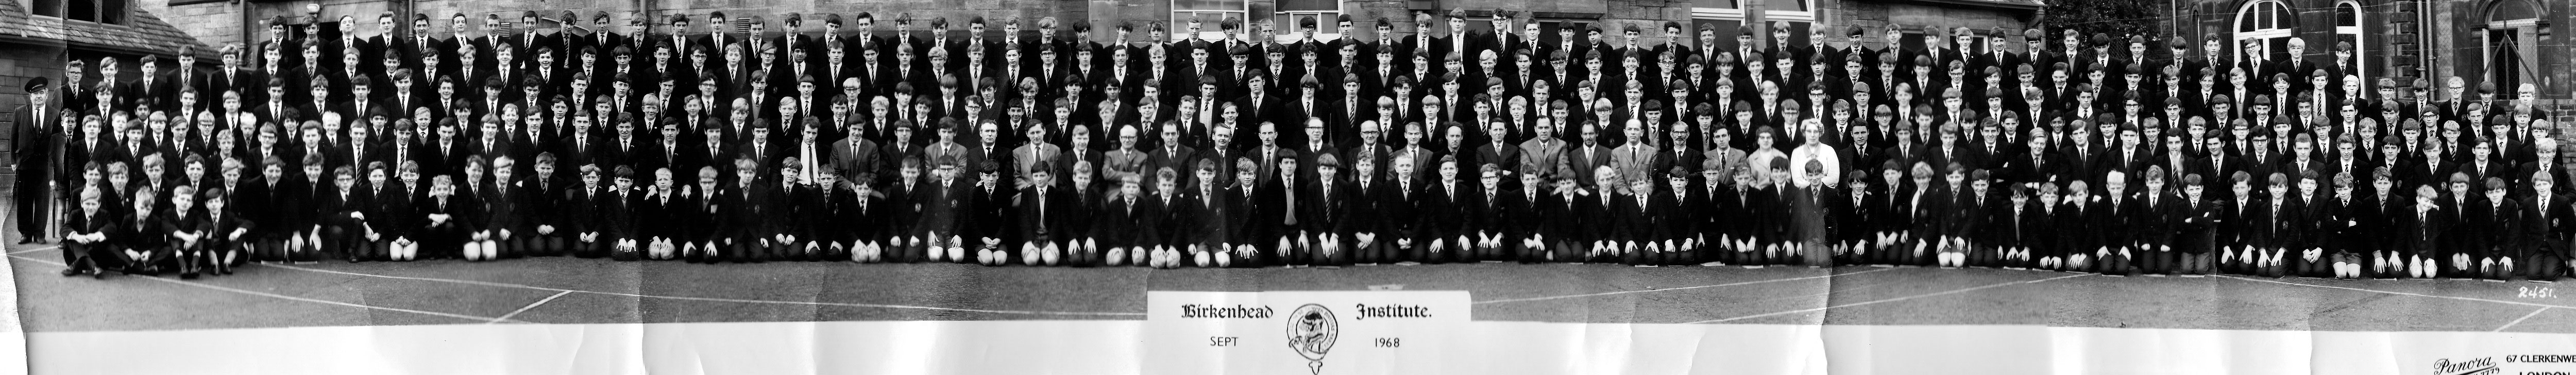 Whole School Photograph - September 1968